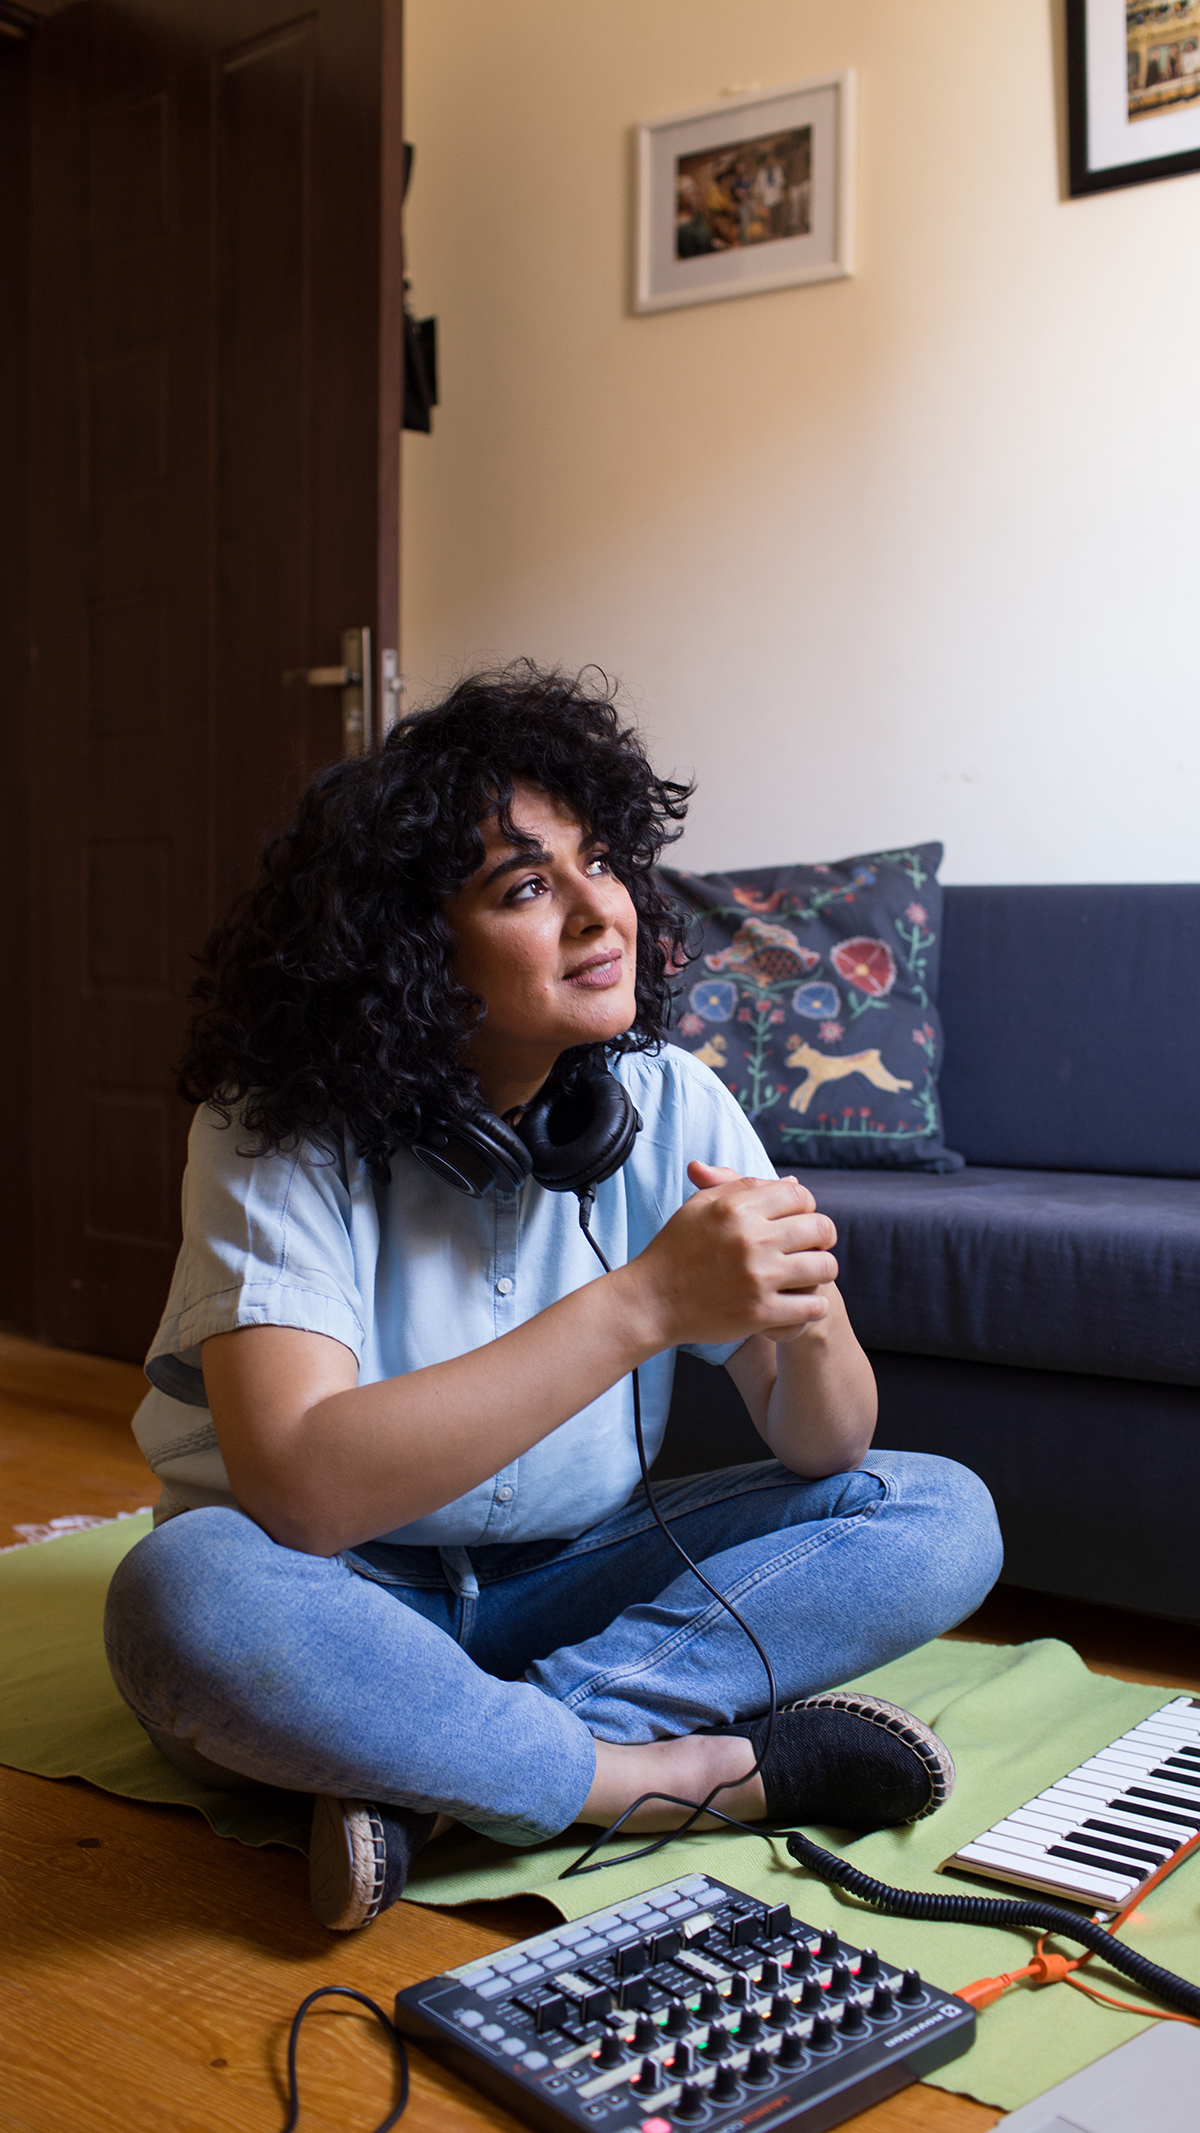 Dina El Wedidi at her home music studio in Egypt, May 4, 2019.